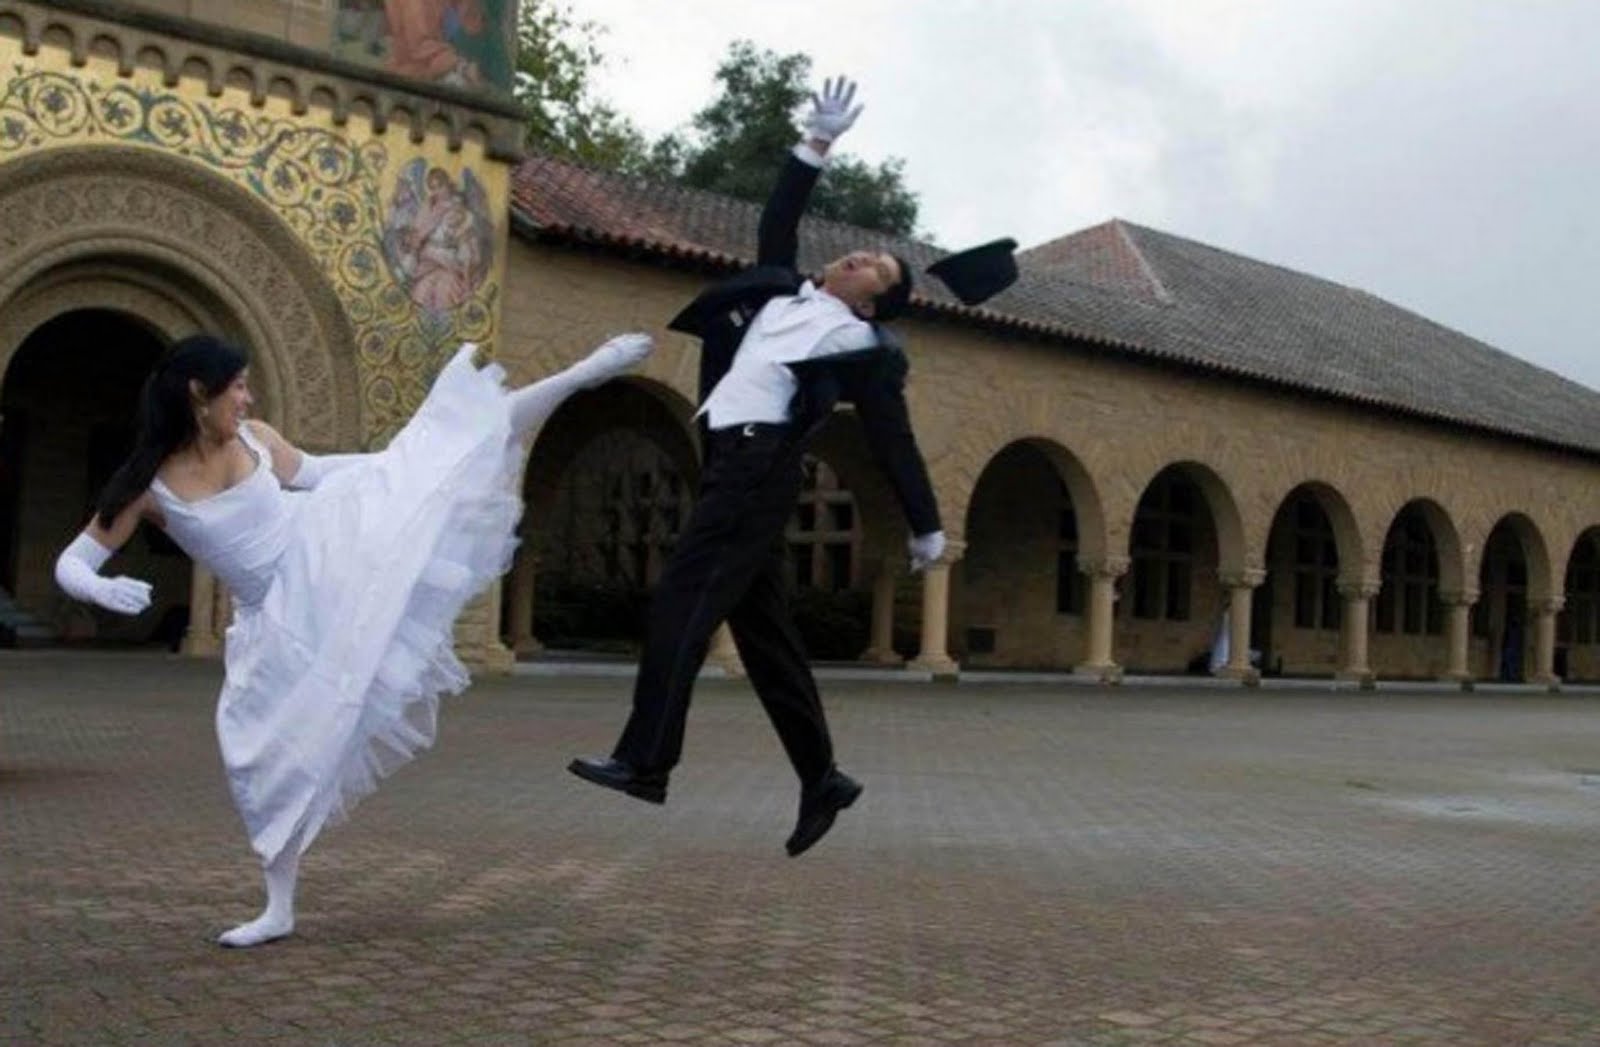 Funny Bride Kicking Groom